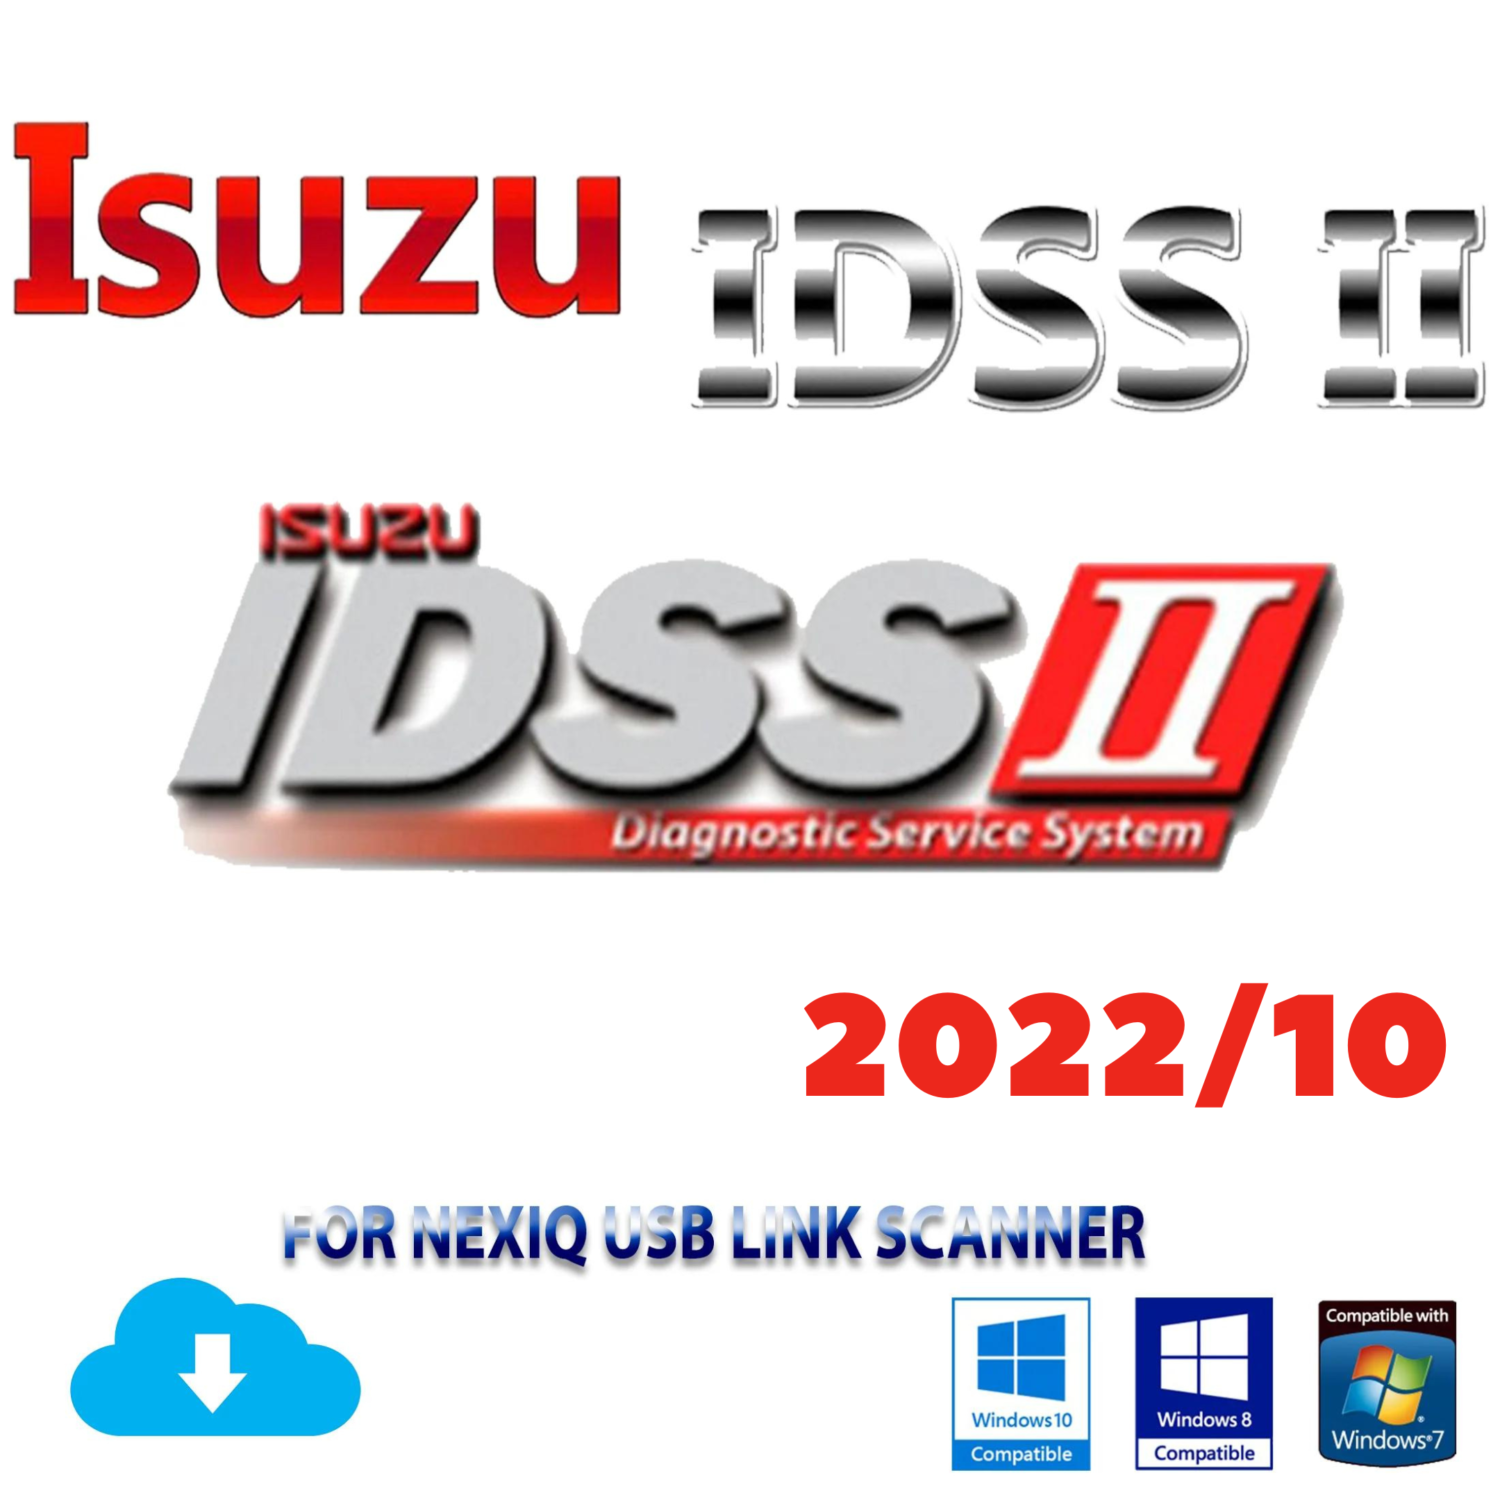 isuzu us idss ii 2022/12 diagnostic service system for nexiq usb link